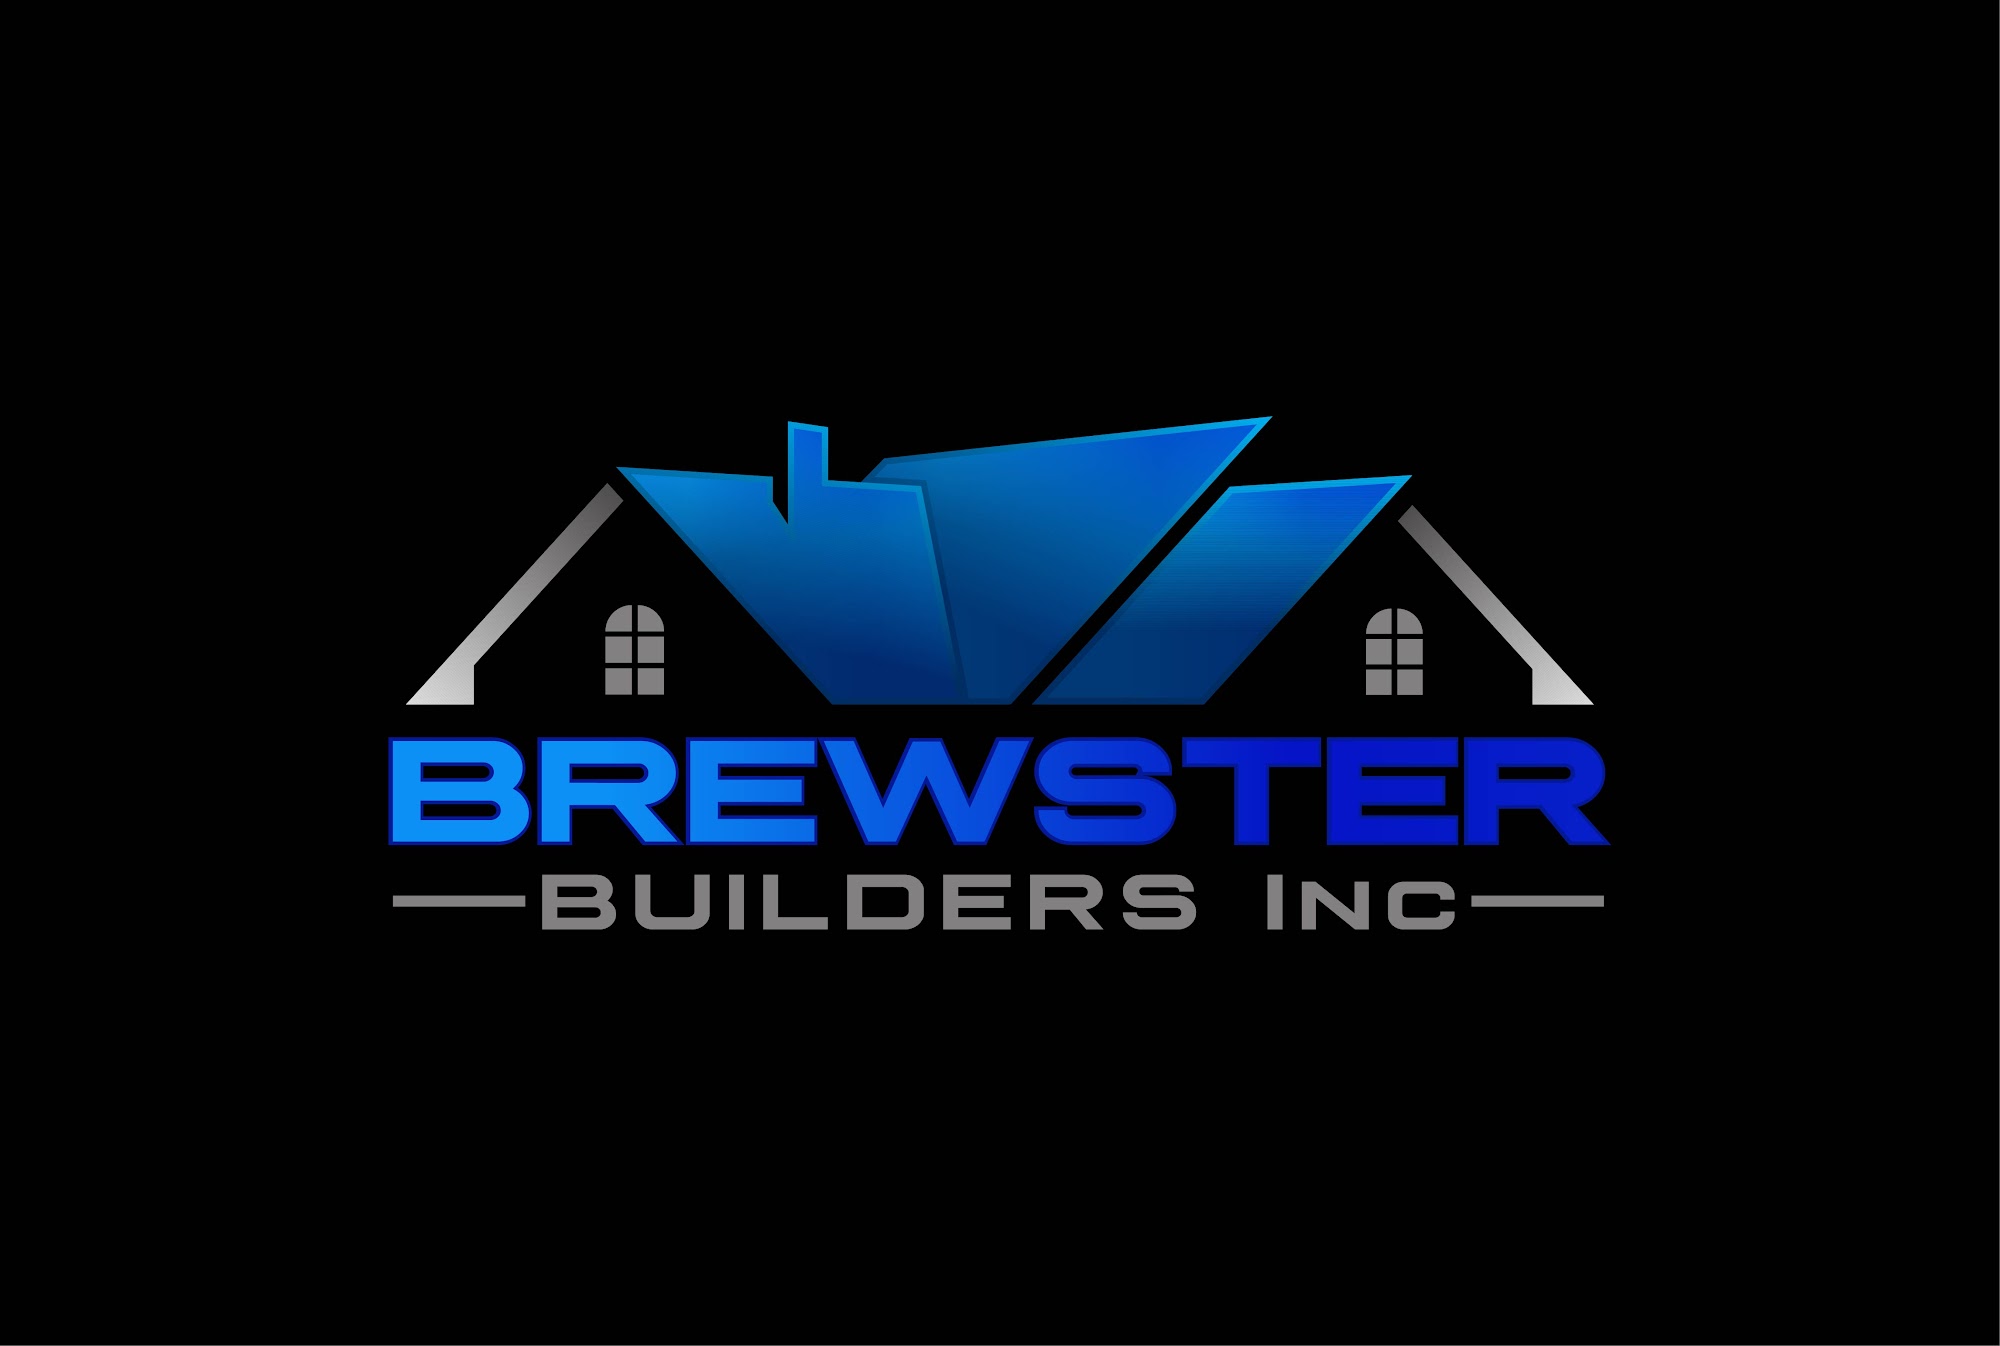 Brewster Builders Inc 439 Industrial Ln, Oneida Tennessee 37841